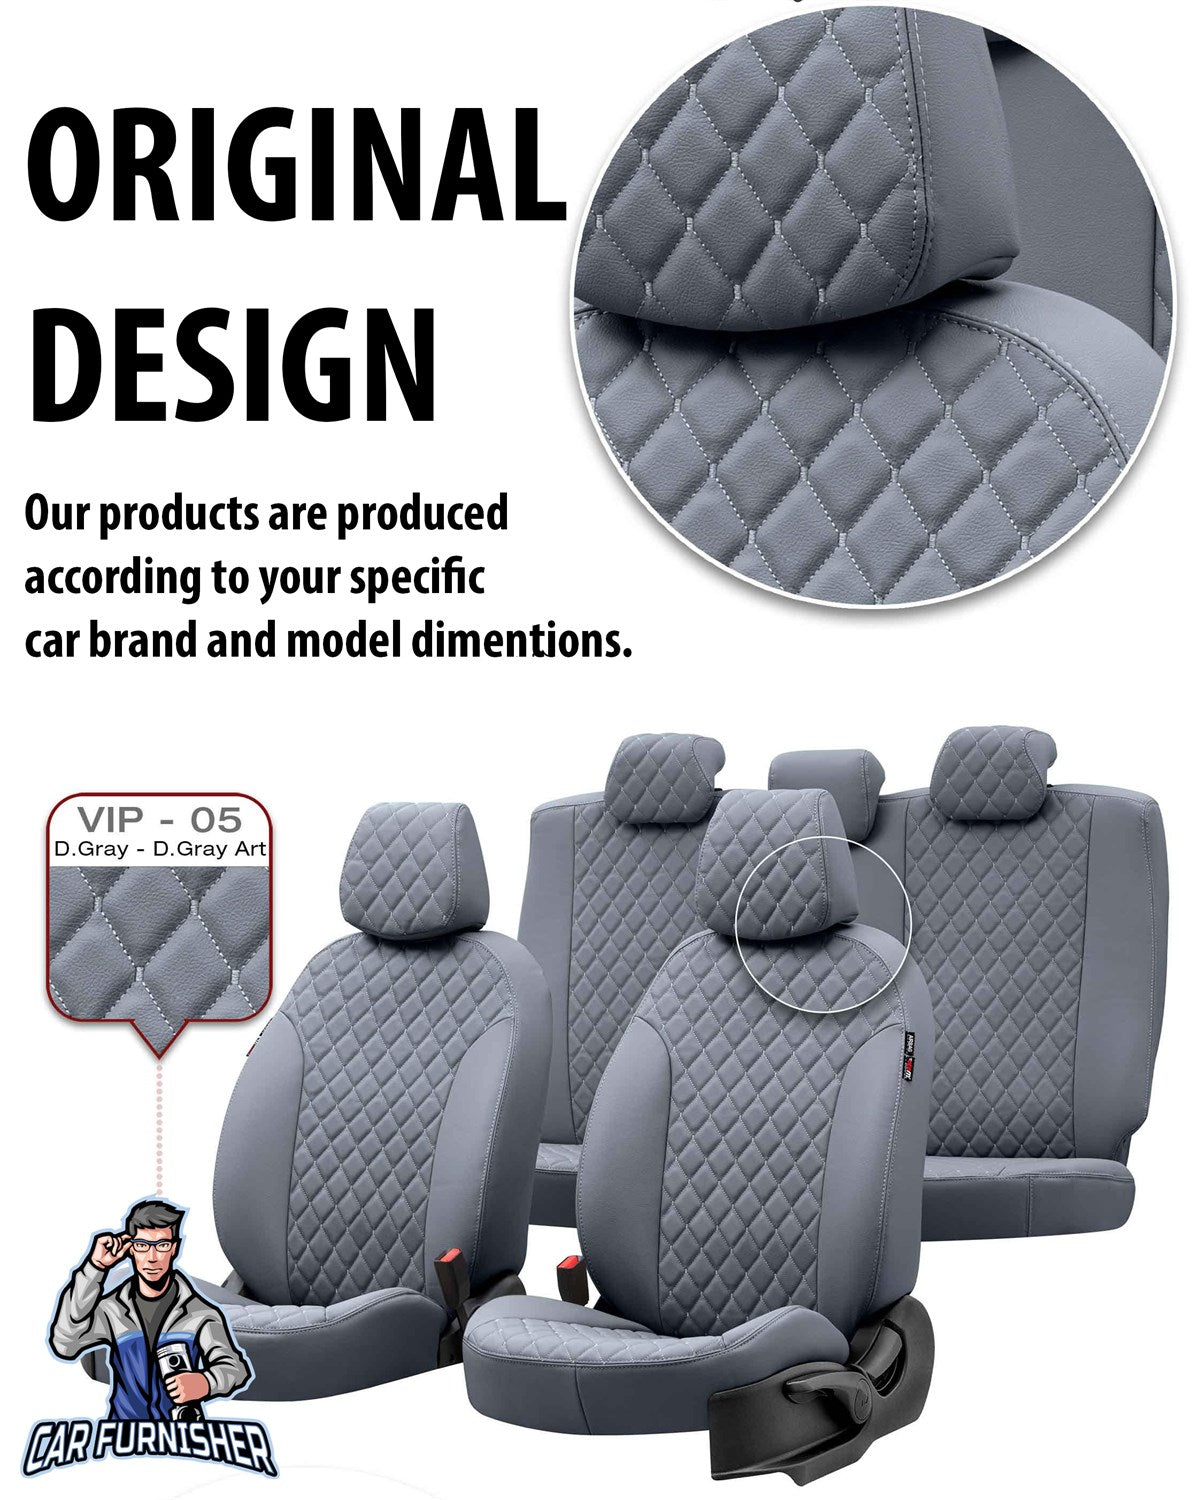 Hyundai i20 Seat Covers Madrid Leather Design Blue Leather